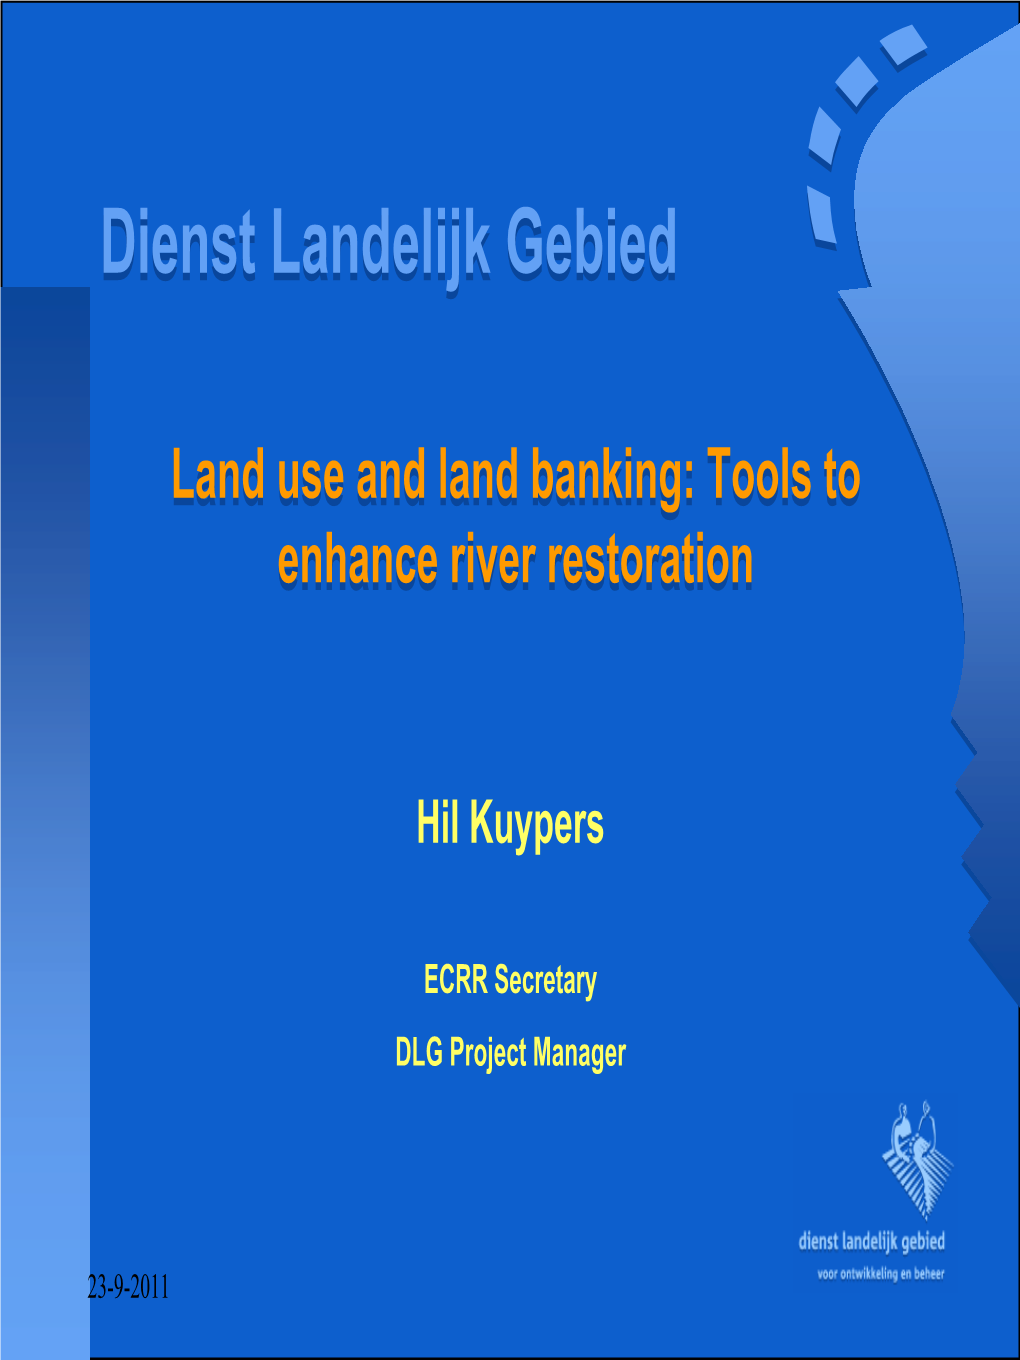 Land Banking: Tools to Enhance River Restoration